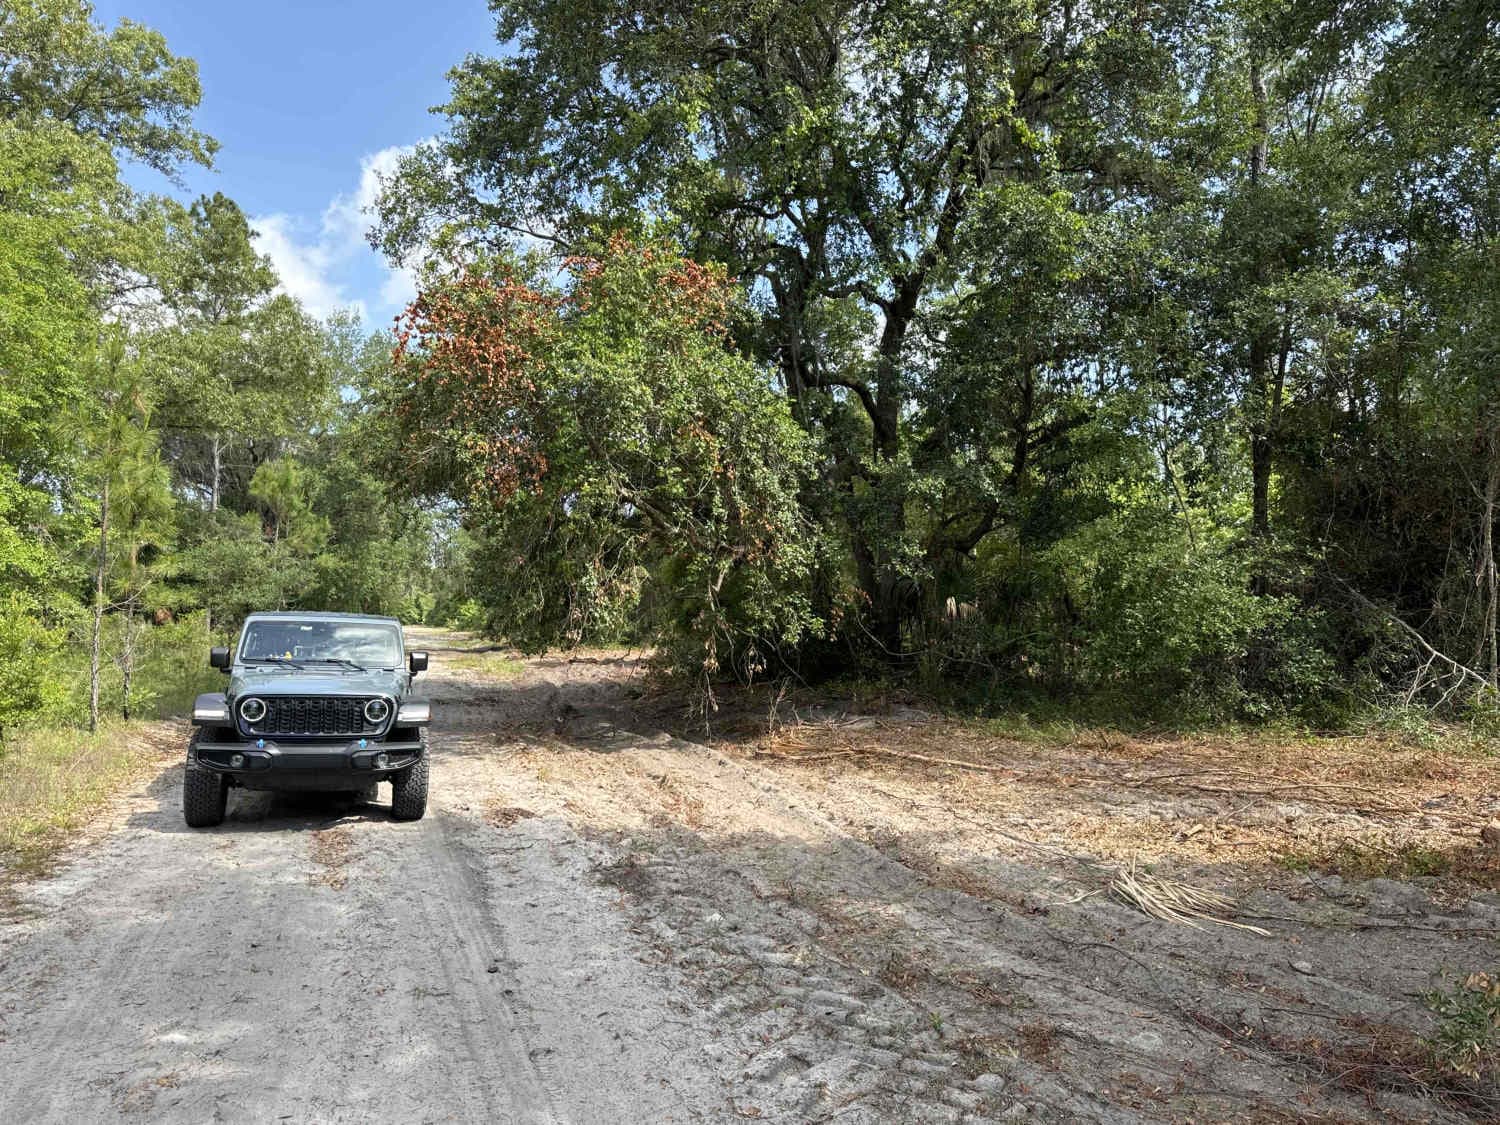 Jeep Trail - Grove Park South WMA